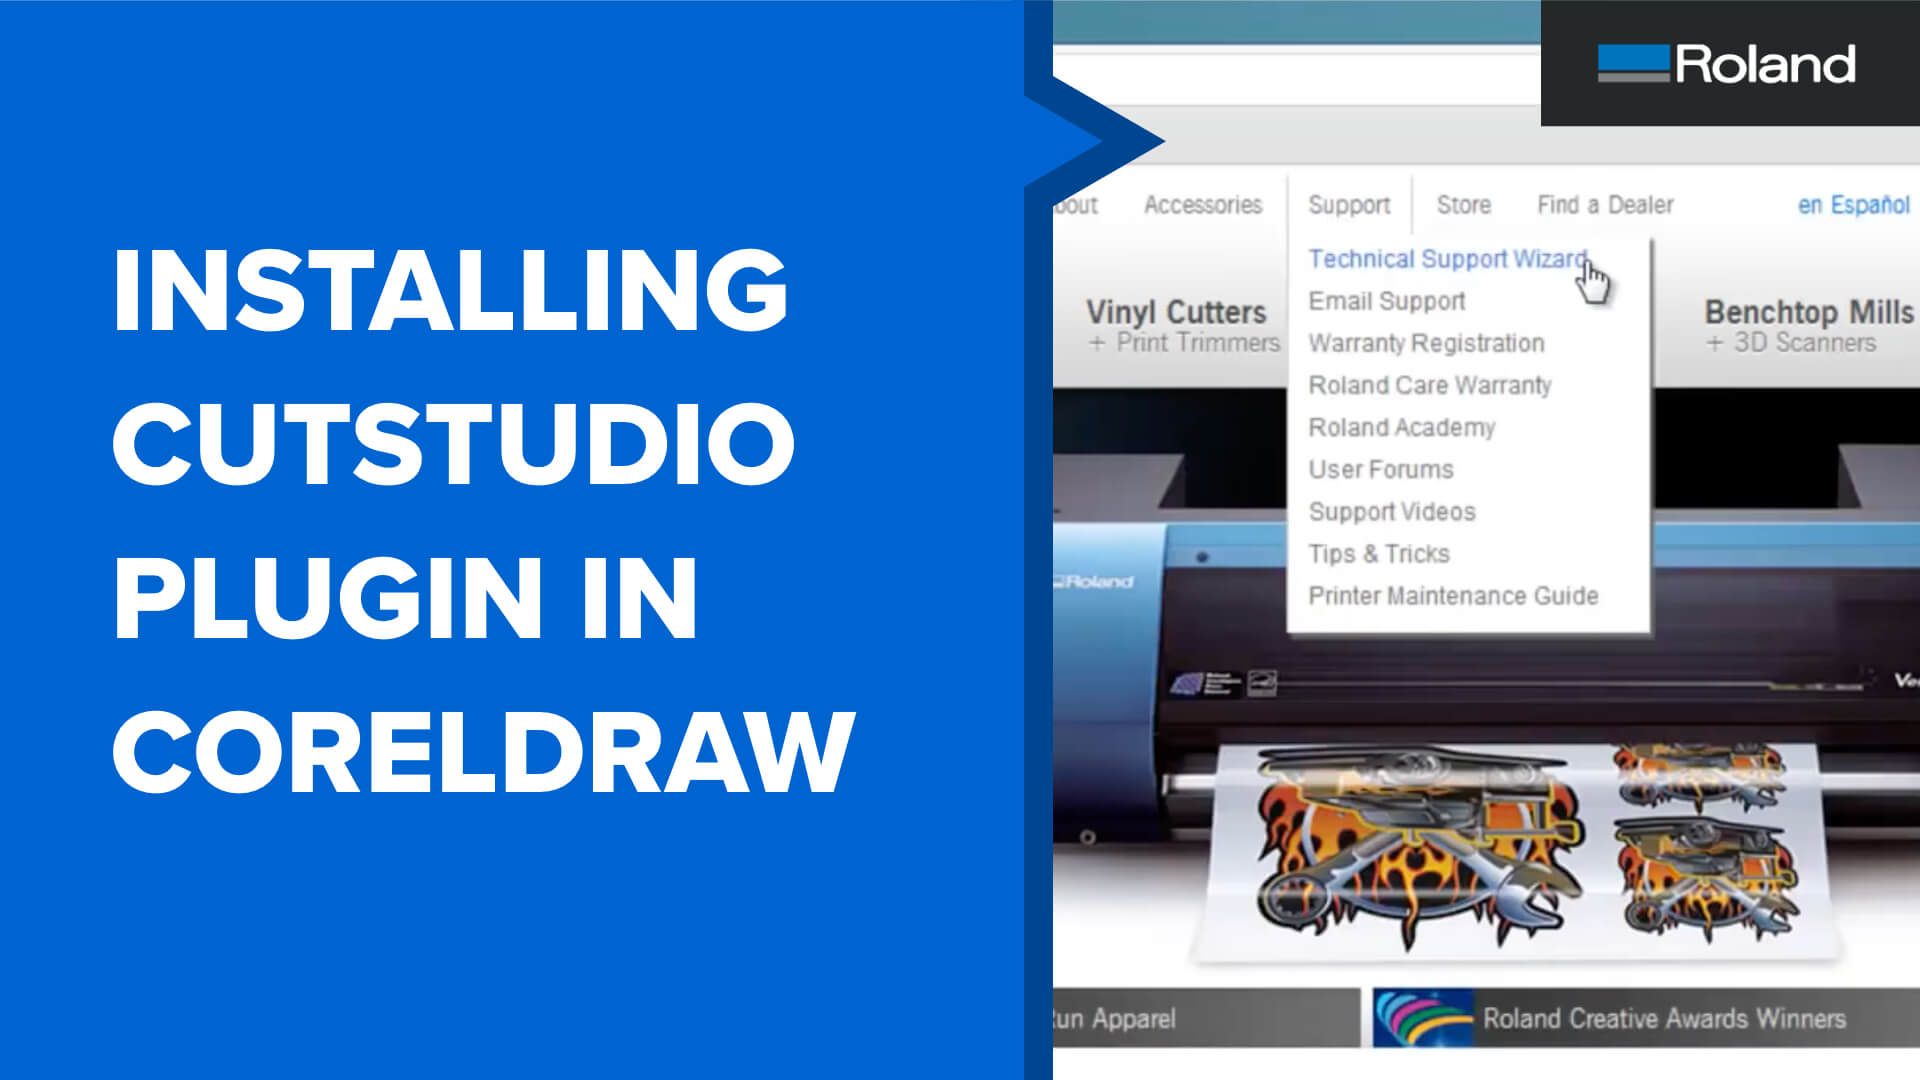 roland cut studio plugin coreldraw download